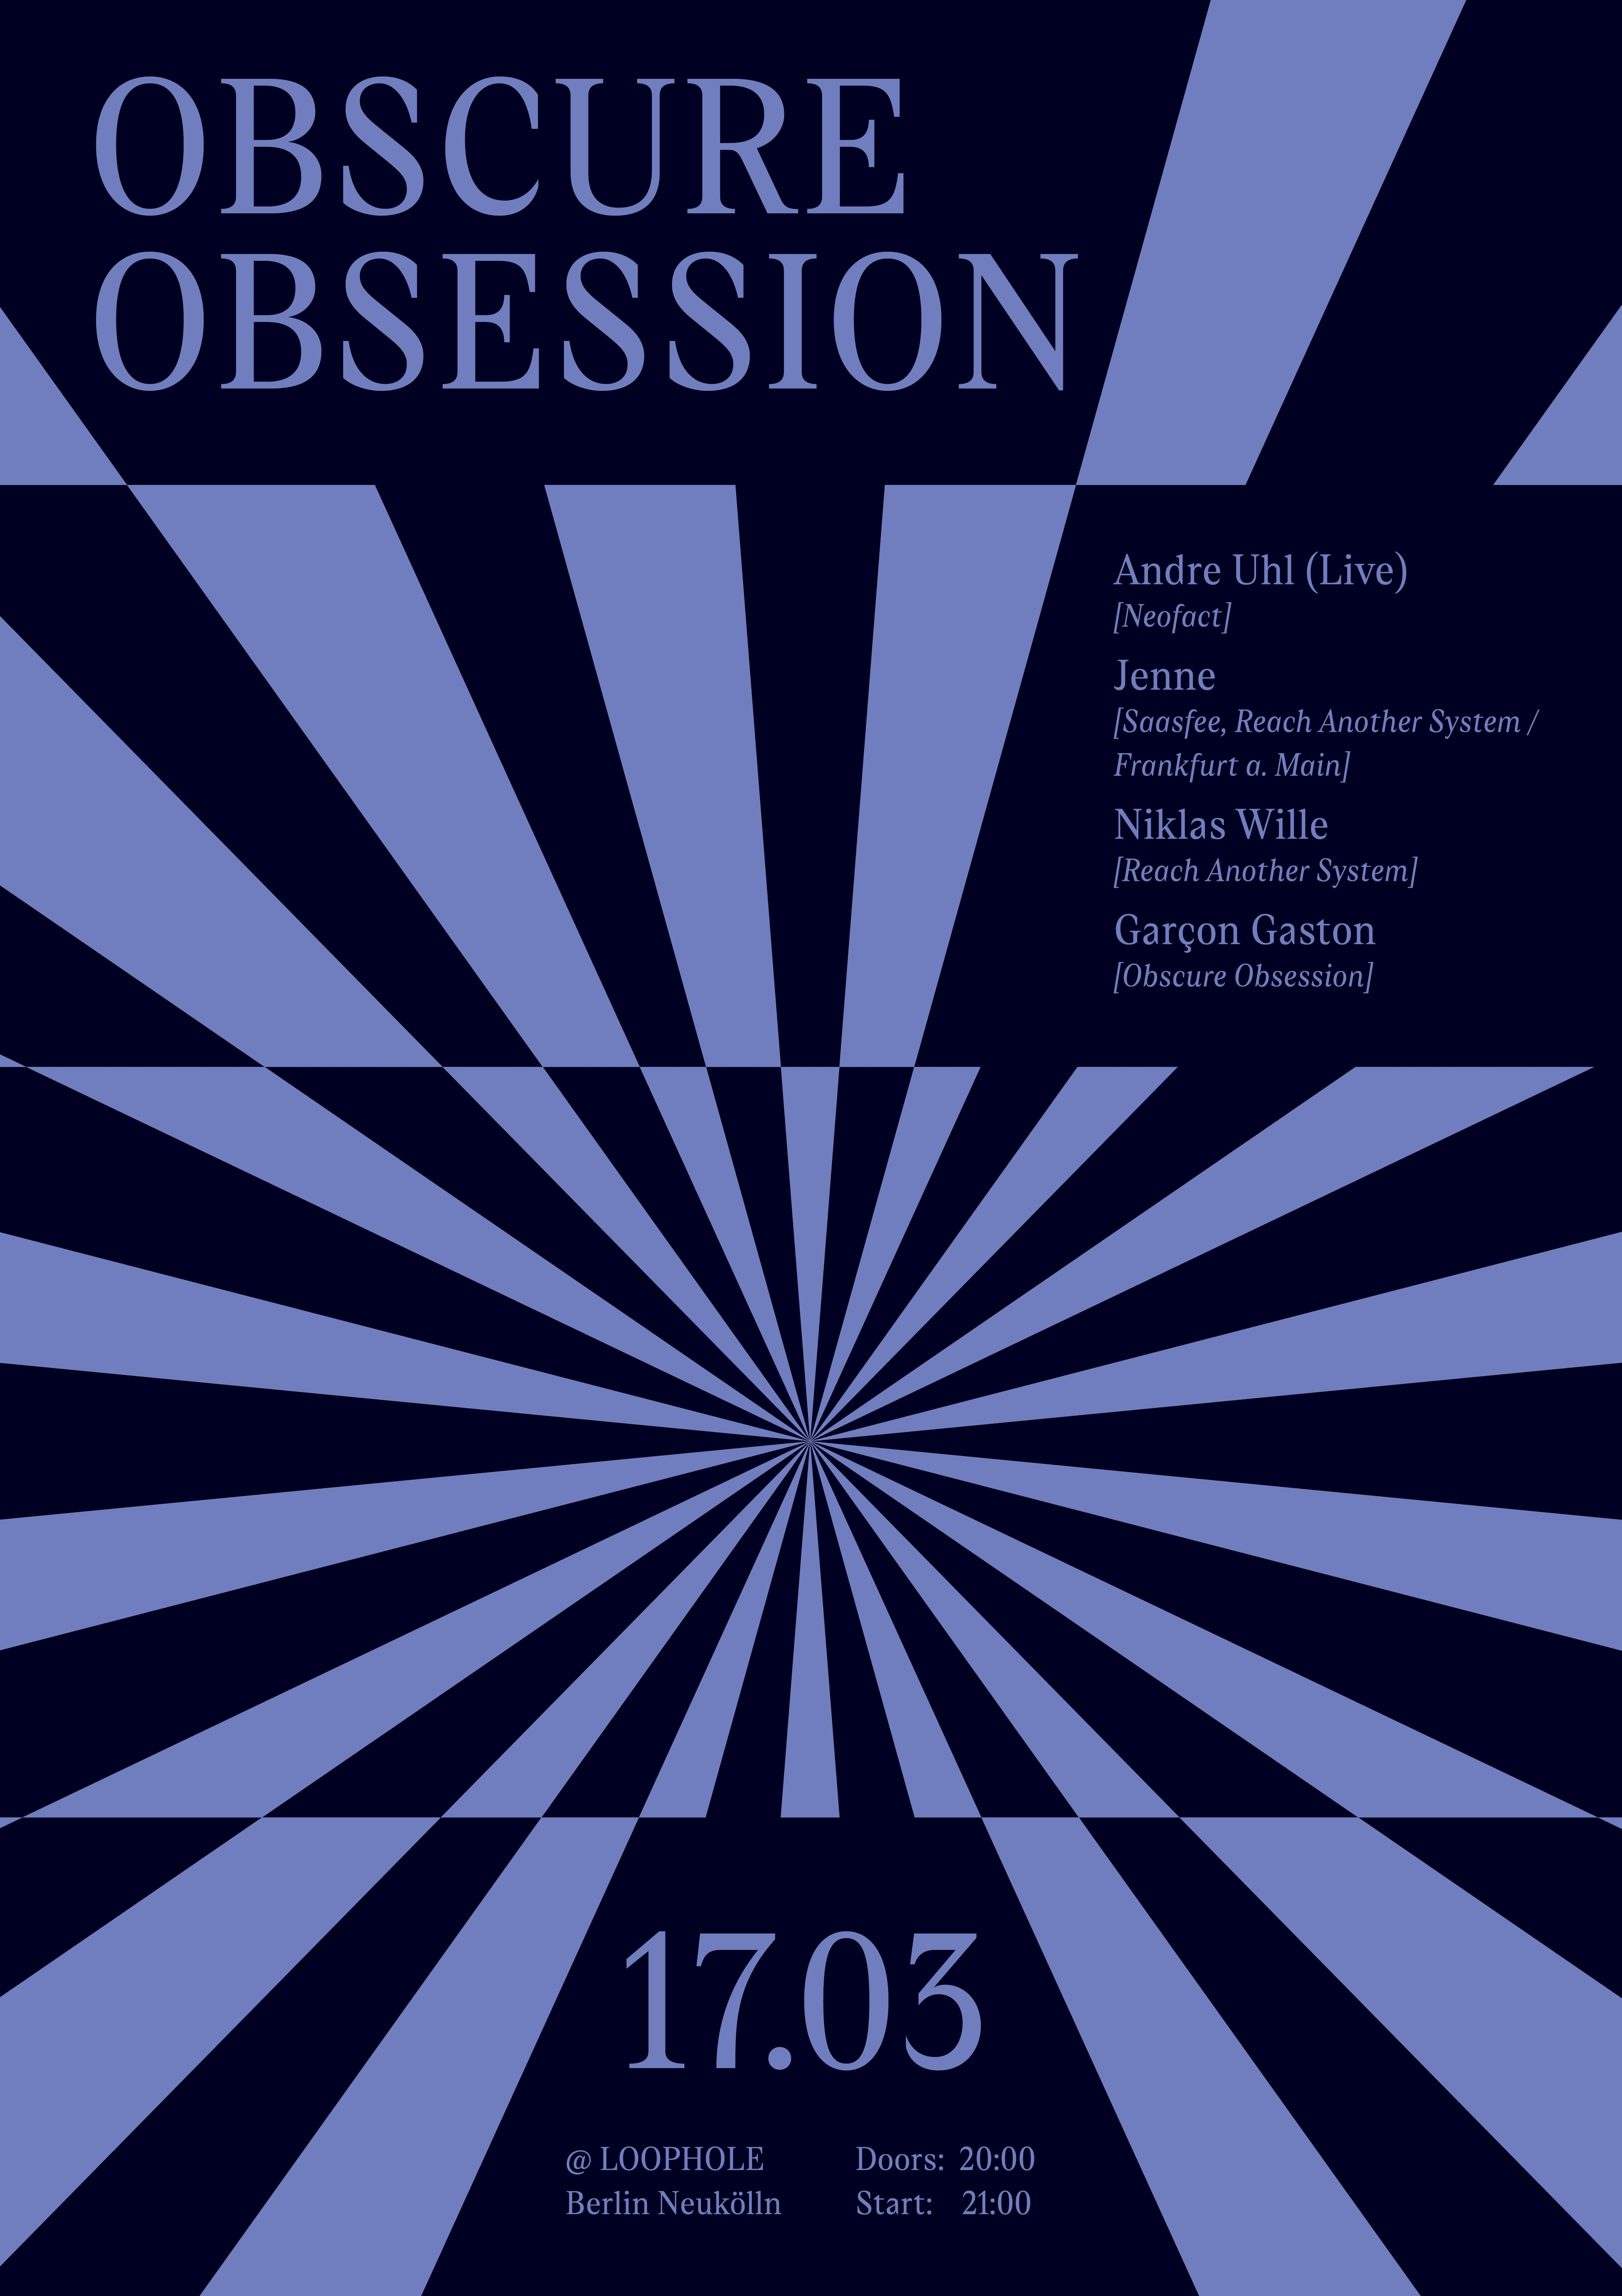 Obscure Obsession with Andre Uhl (Live), Jenne, Niklas Wille & Garçon Gaston - フライヤー表